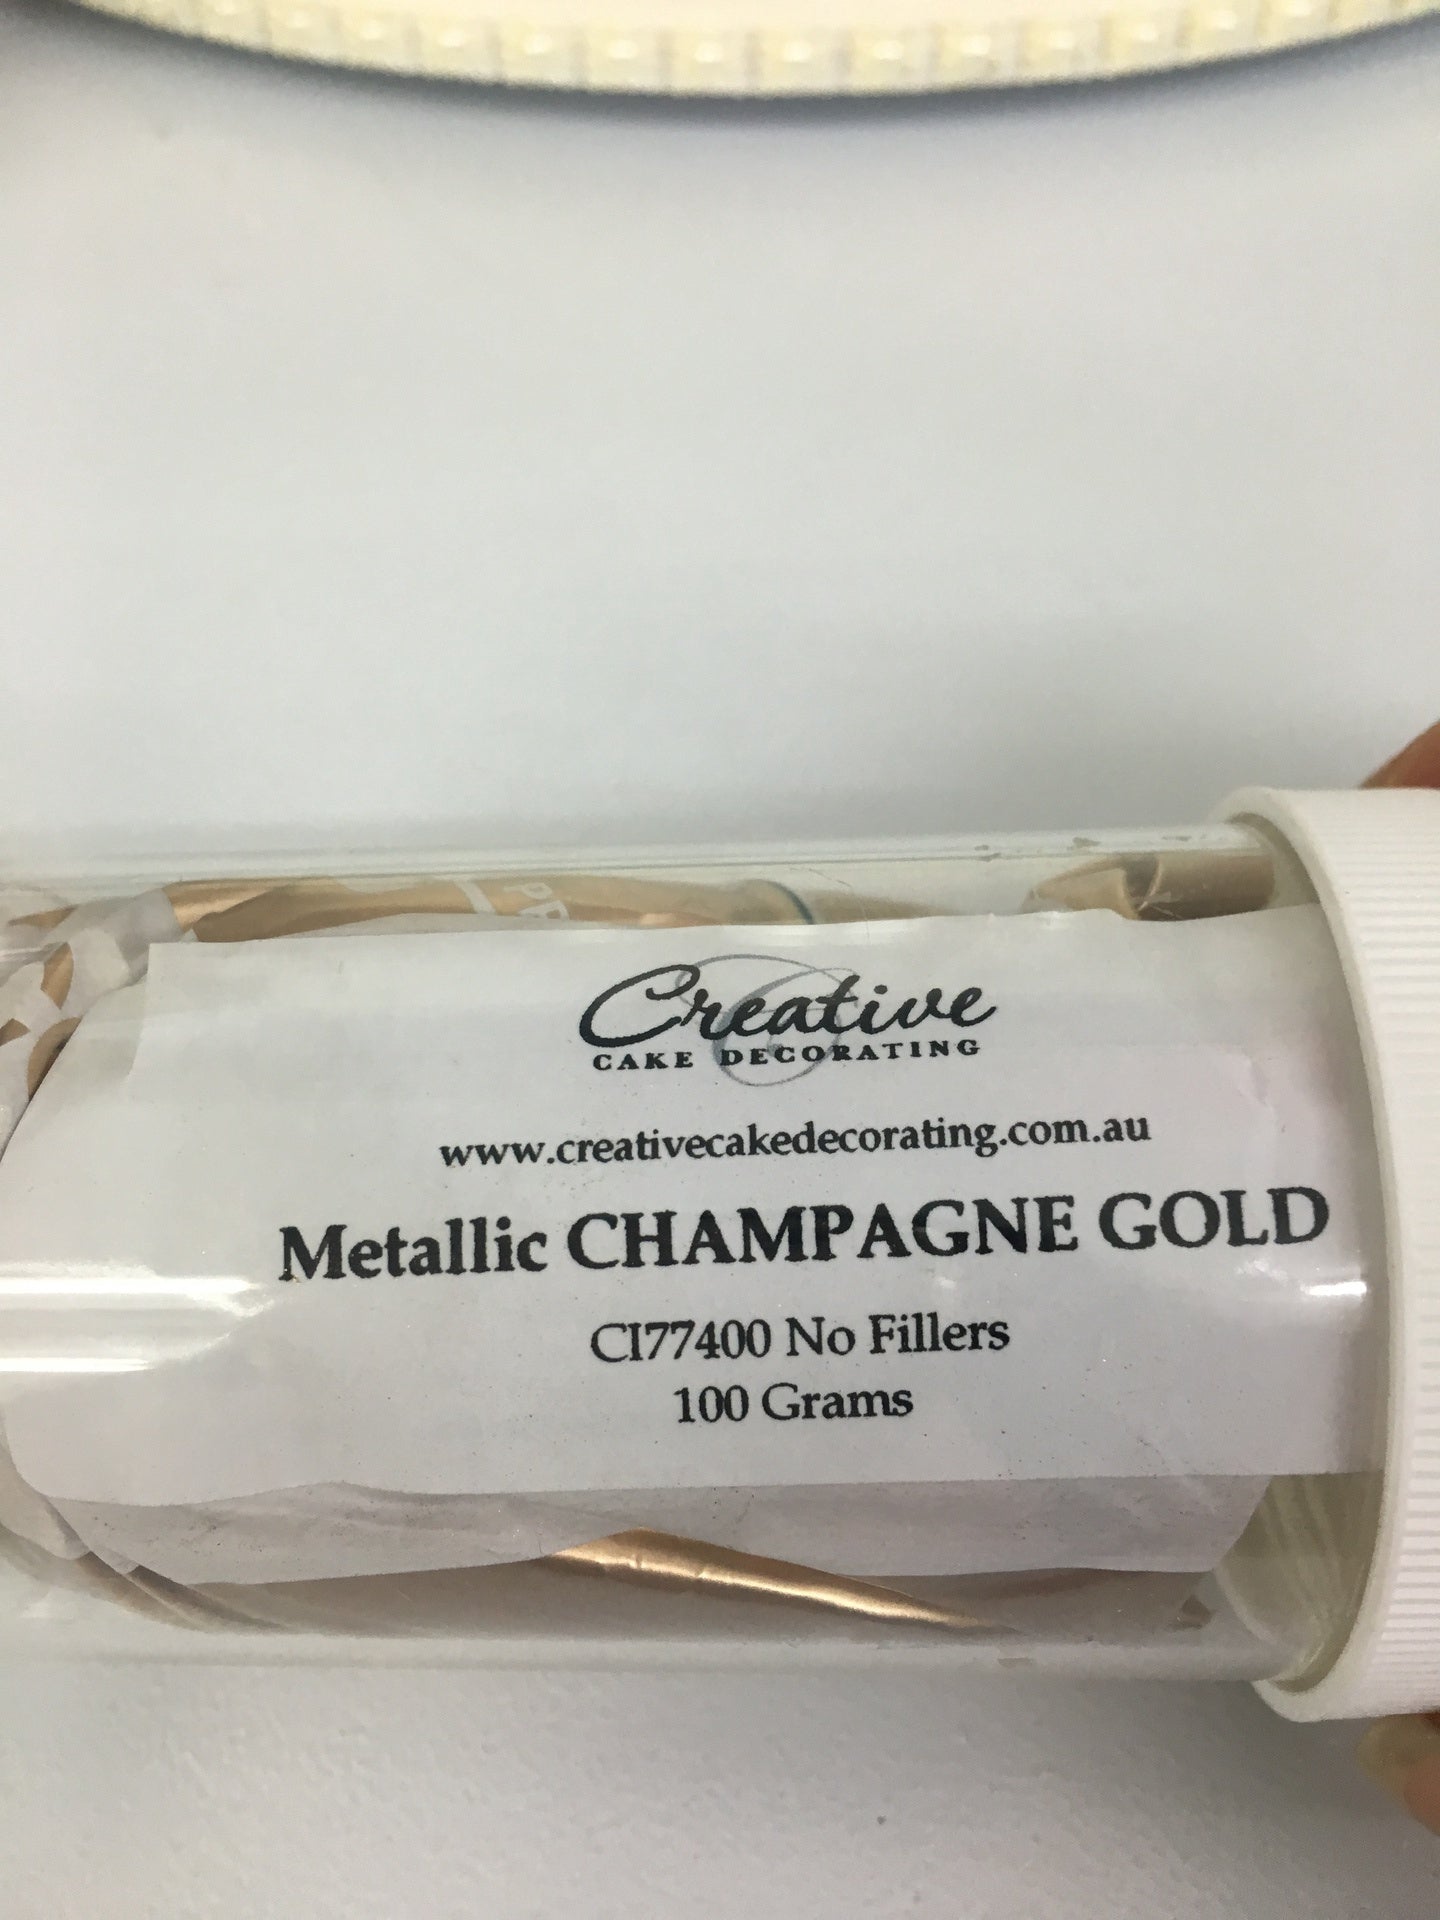 Creative Cake Decorating Metallic Champagne Gold Dust 100g